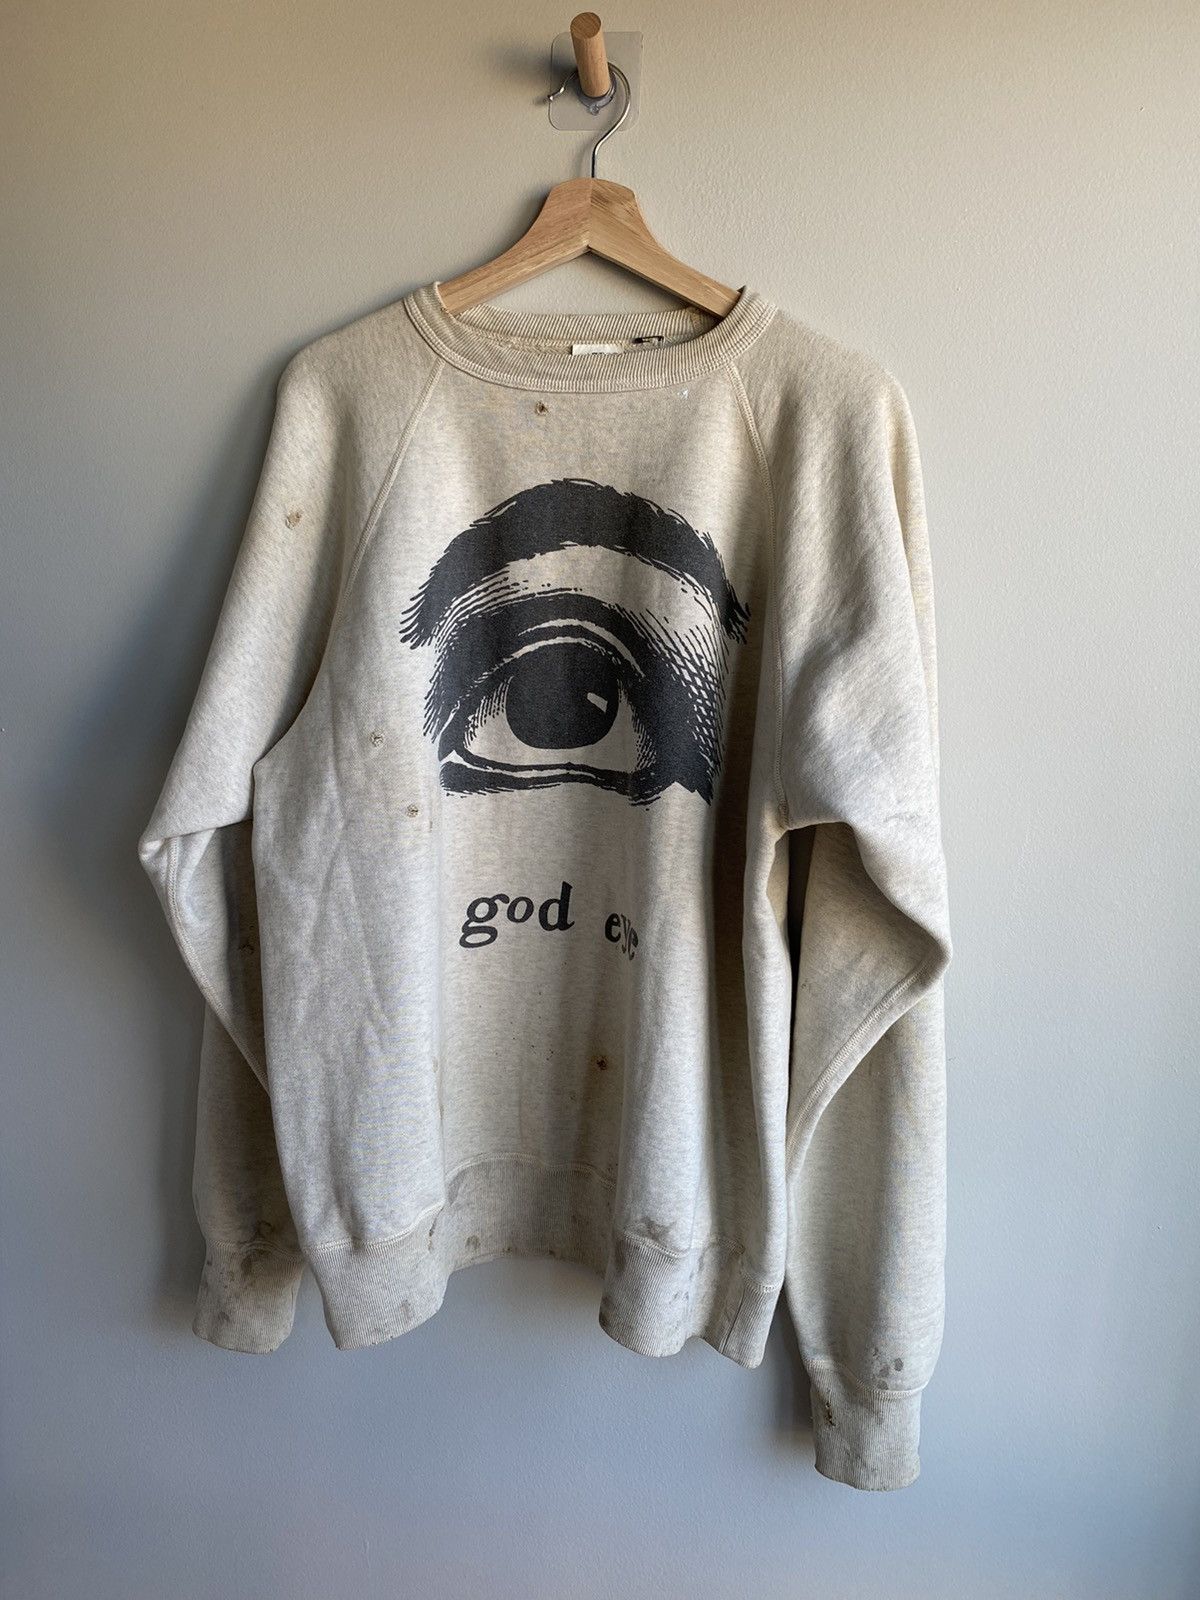 Saint Michael God Eye | Grailed